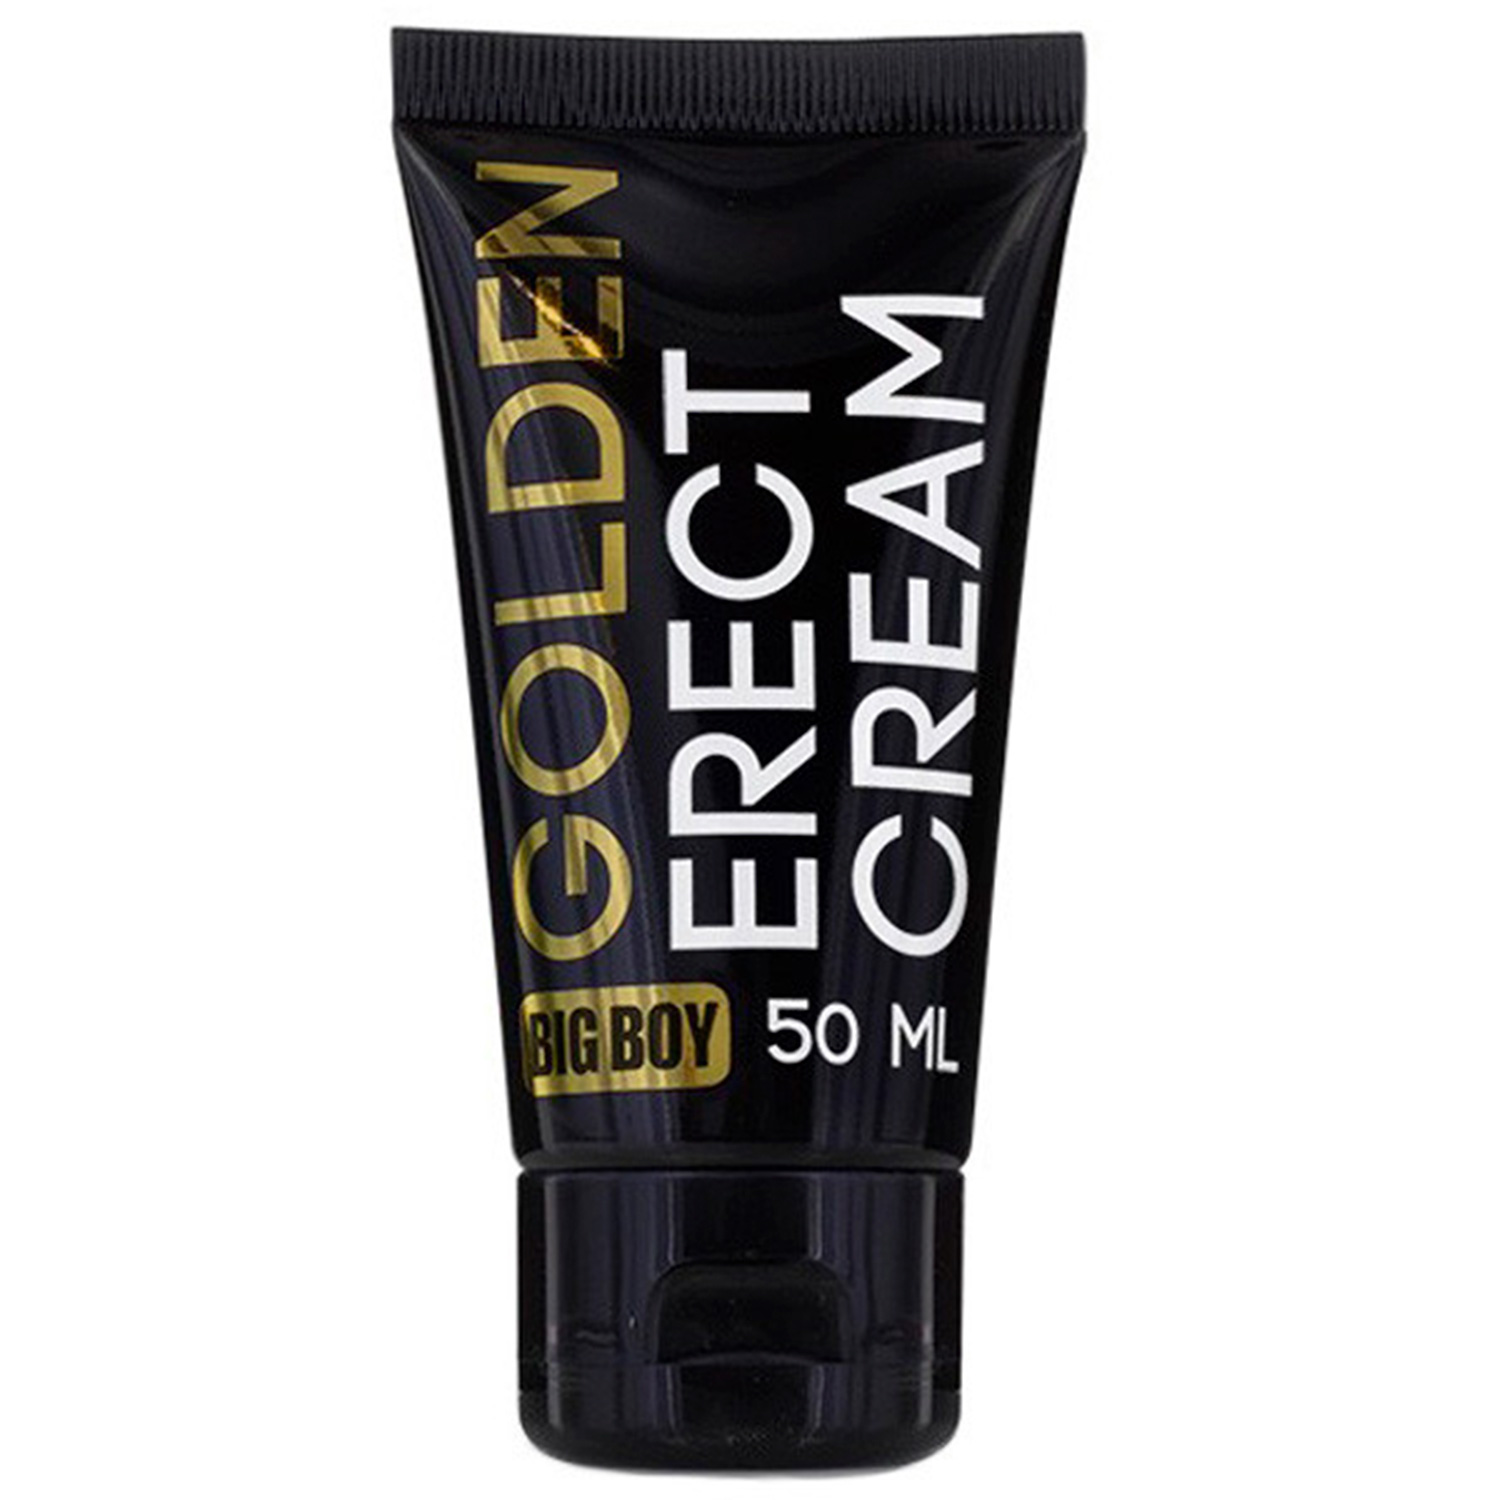 Big Boy Golden Erect Cream 50 ml   - Vit